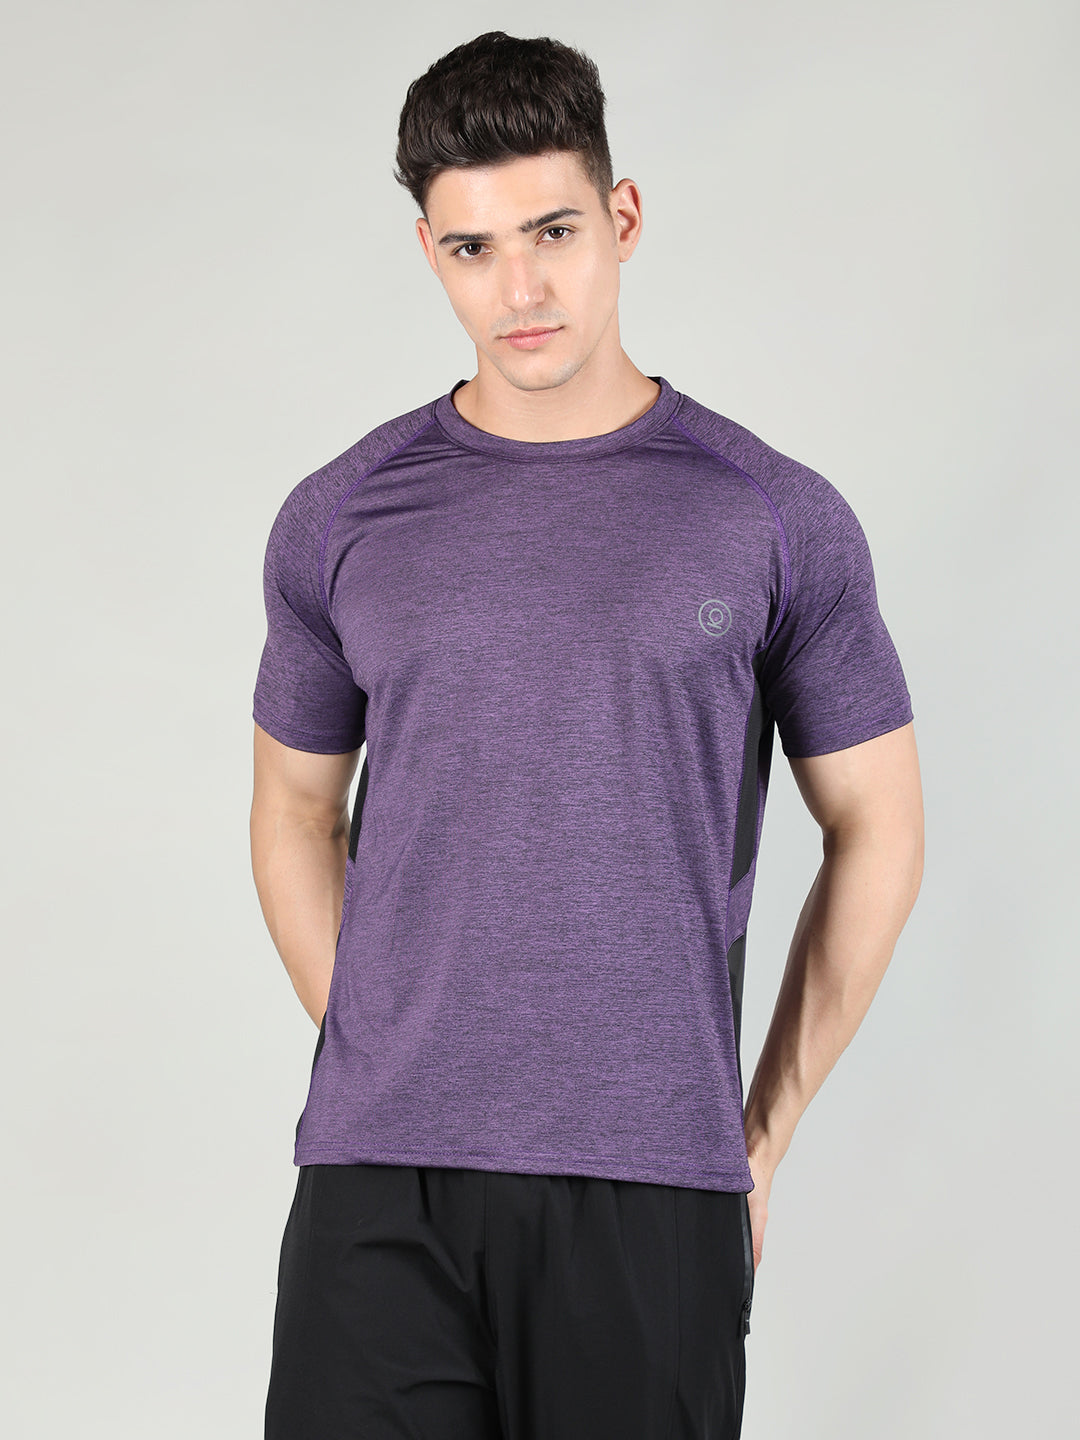 Men's Purple Gym T-shirt